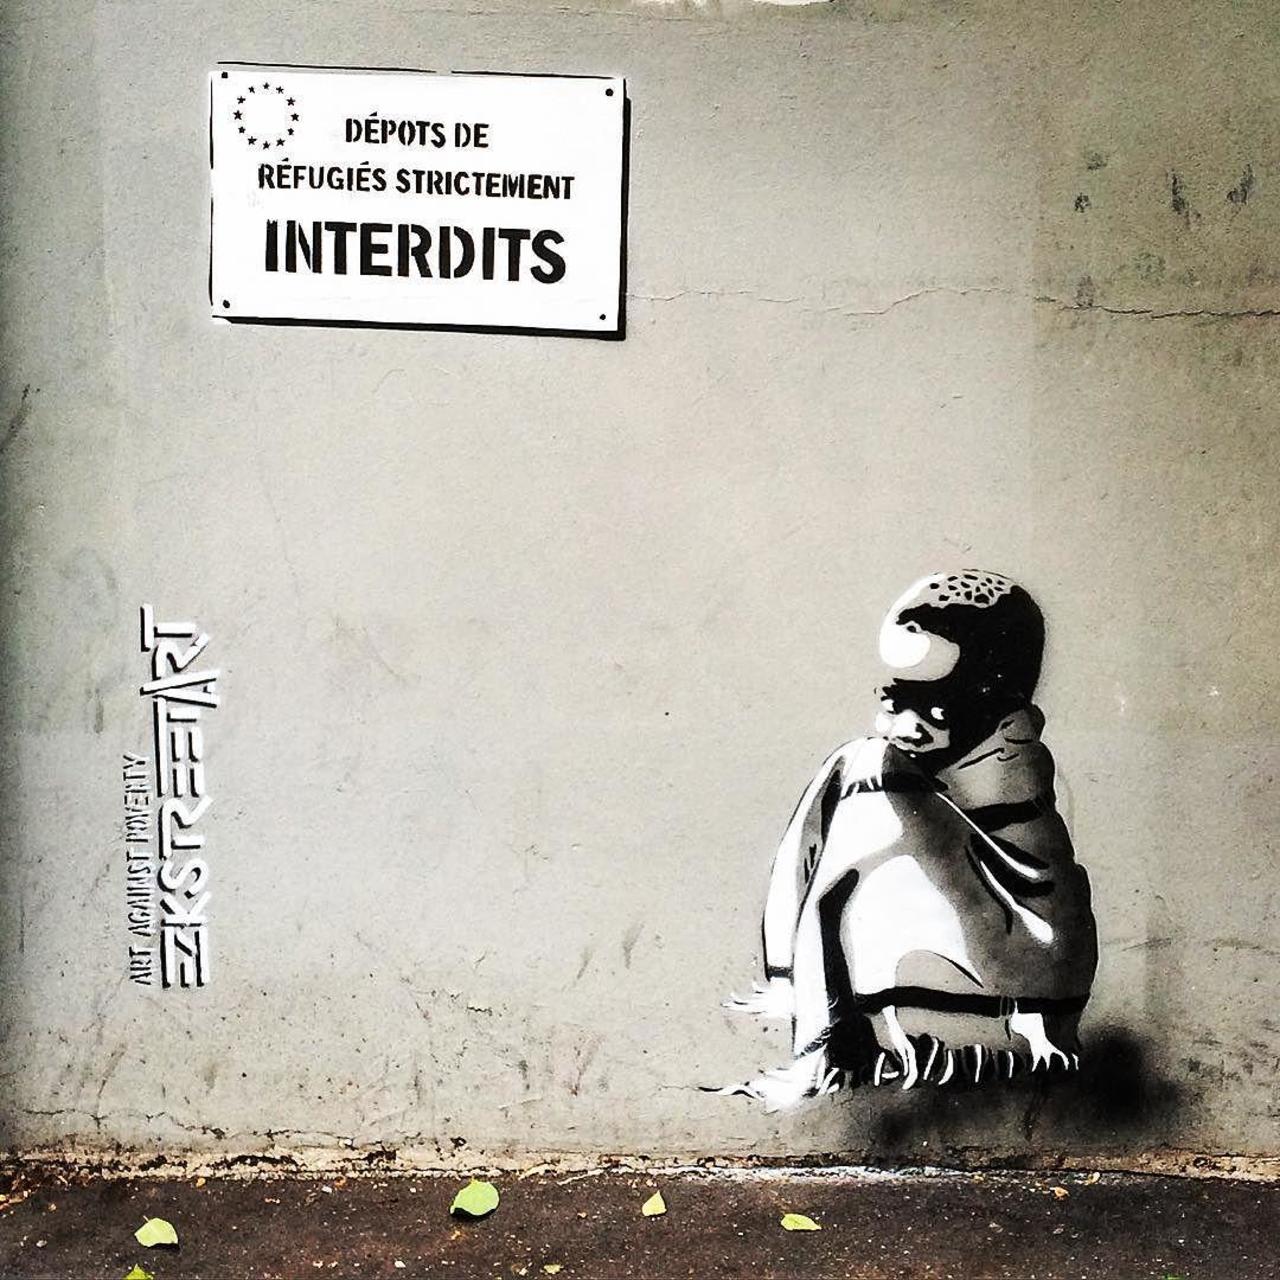 http://ift.tt/1KiqpQt #Paris #graffiti photo by julosteart http://ift.tt/1MoQUSp #StreetArt http://t.co/RQAkEjSEiU